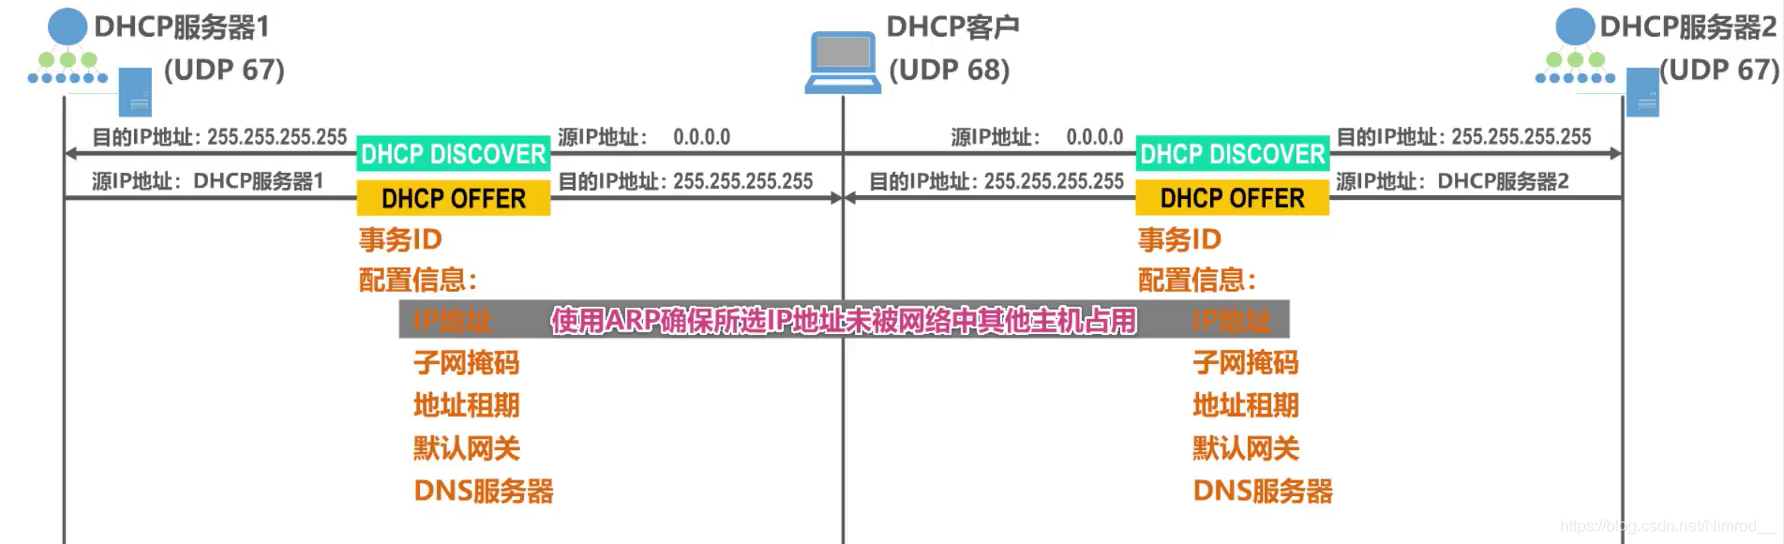 DHCP服务器接收报文后返回报文